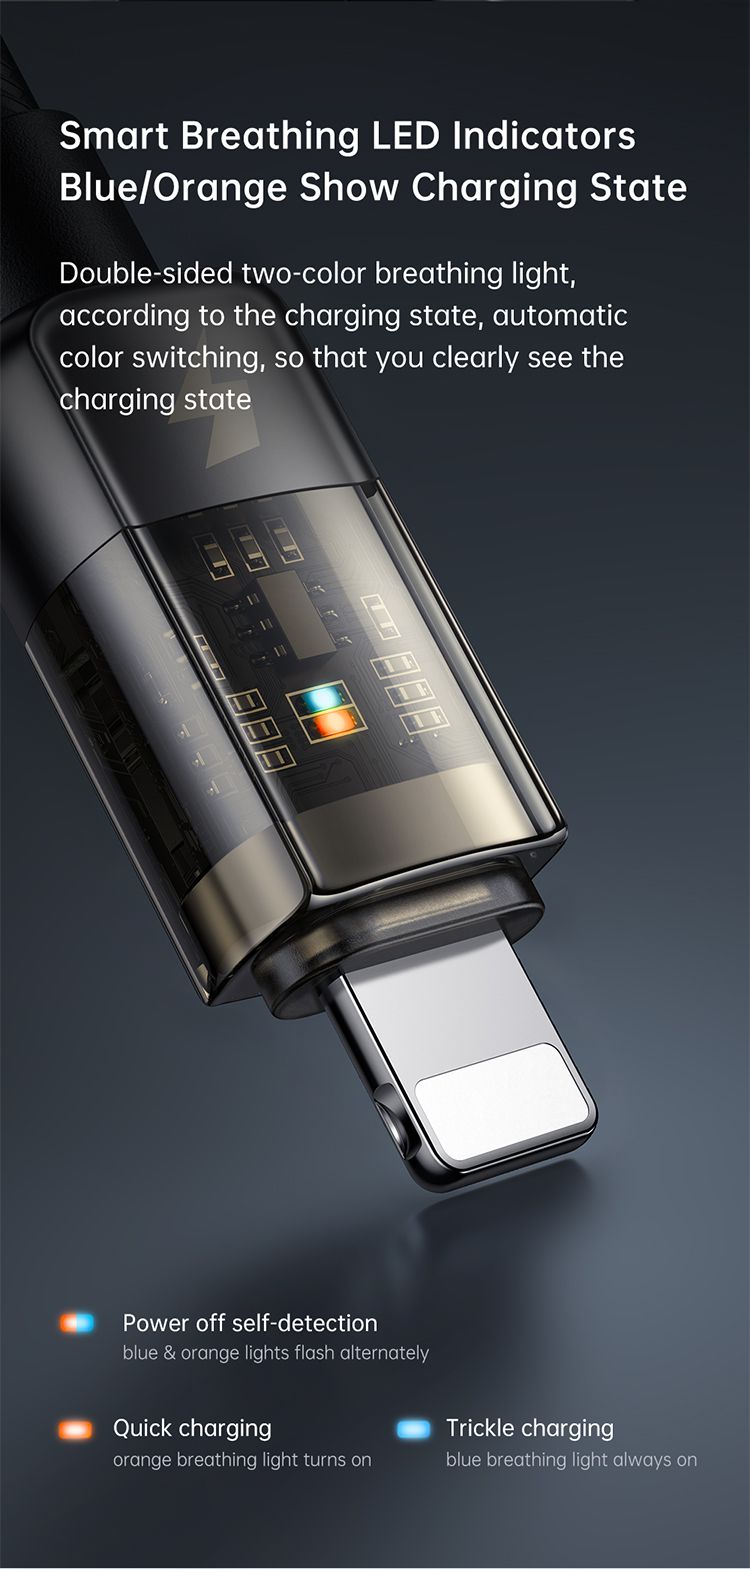 کابل شارژ هوشمند لایتنینگ 3 آمپر مک دودو مدل MCDODO CA-314 | جانبی 360